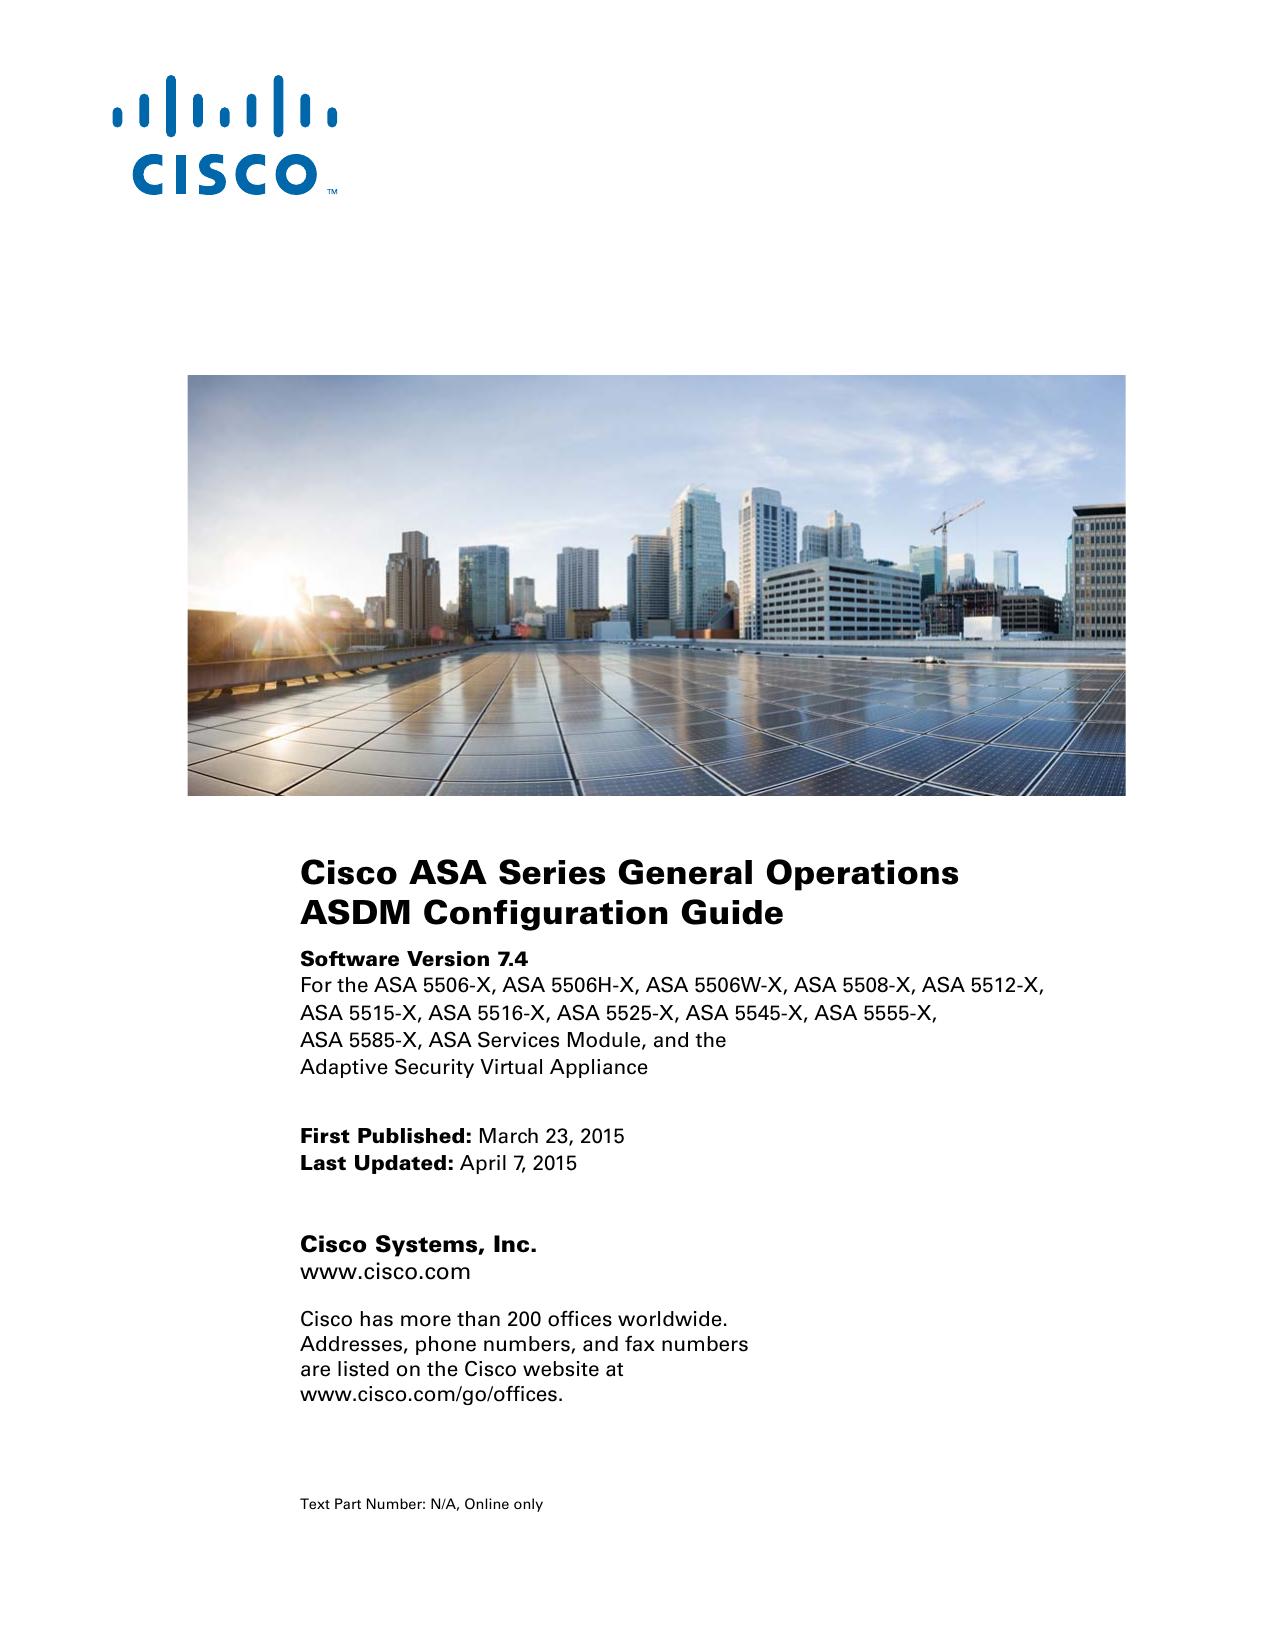 ASDM Book 1: Cisco ASA Series General Operations ASDM Configuration Guide, 7.4 by ctsadmin-wem-p.gen